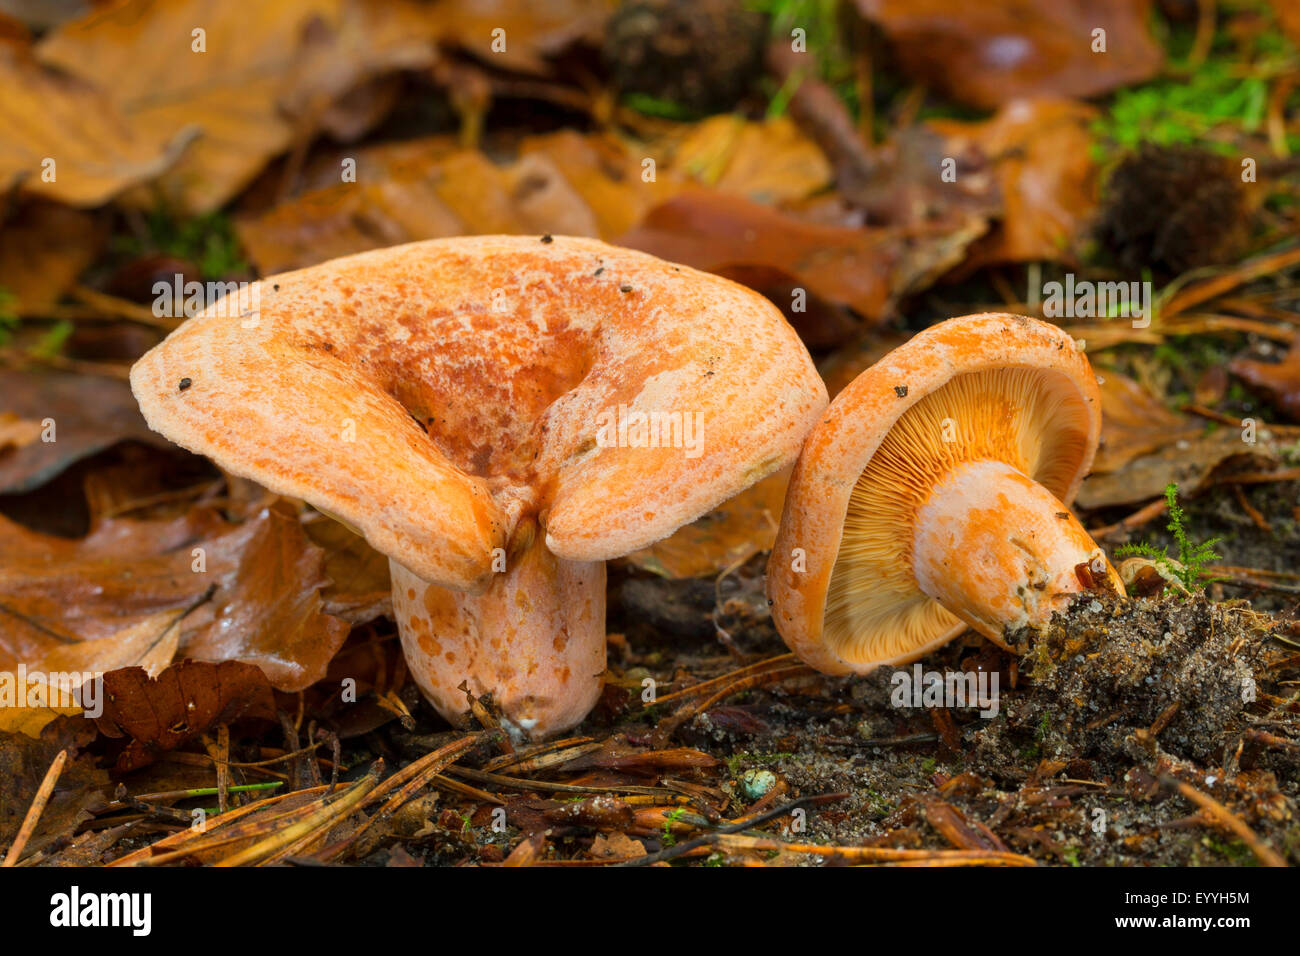 Saffron milk cap, Saffron milkcap, Red pine mushroom (Lactarius deliciosus), two milk caps on the forest gound with pine needles, Germany Stock Photo